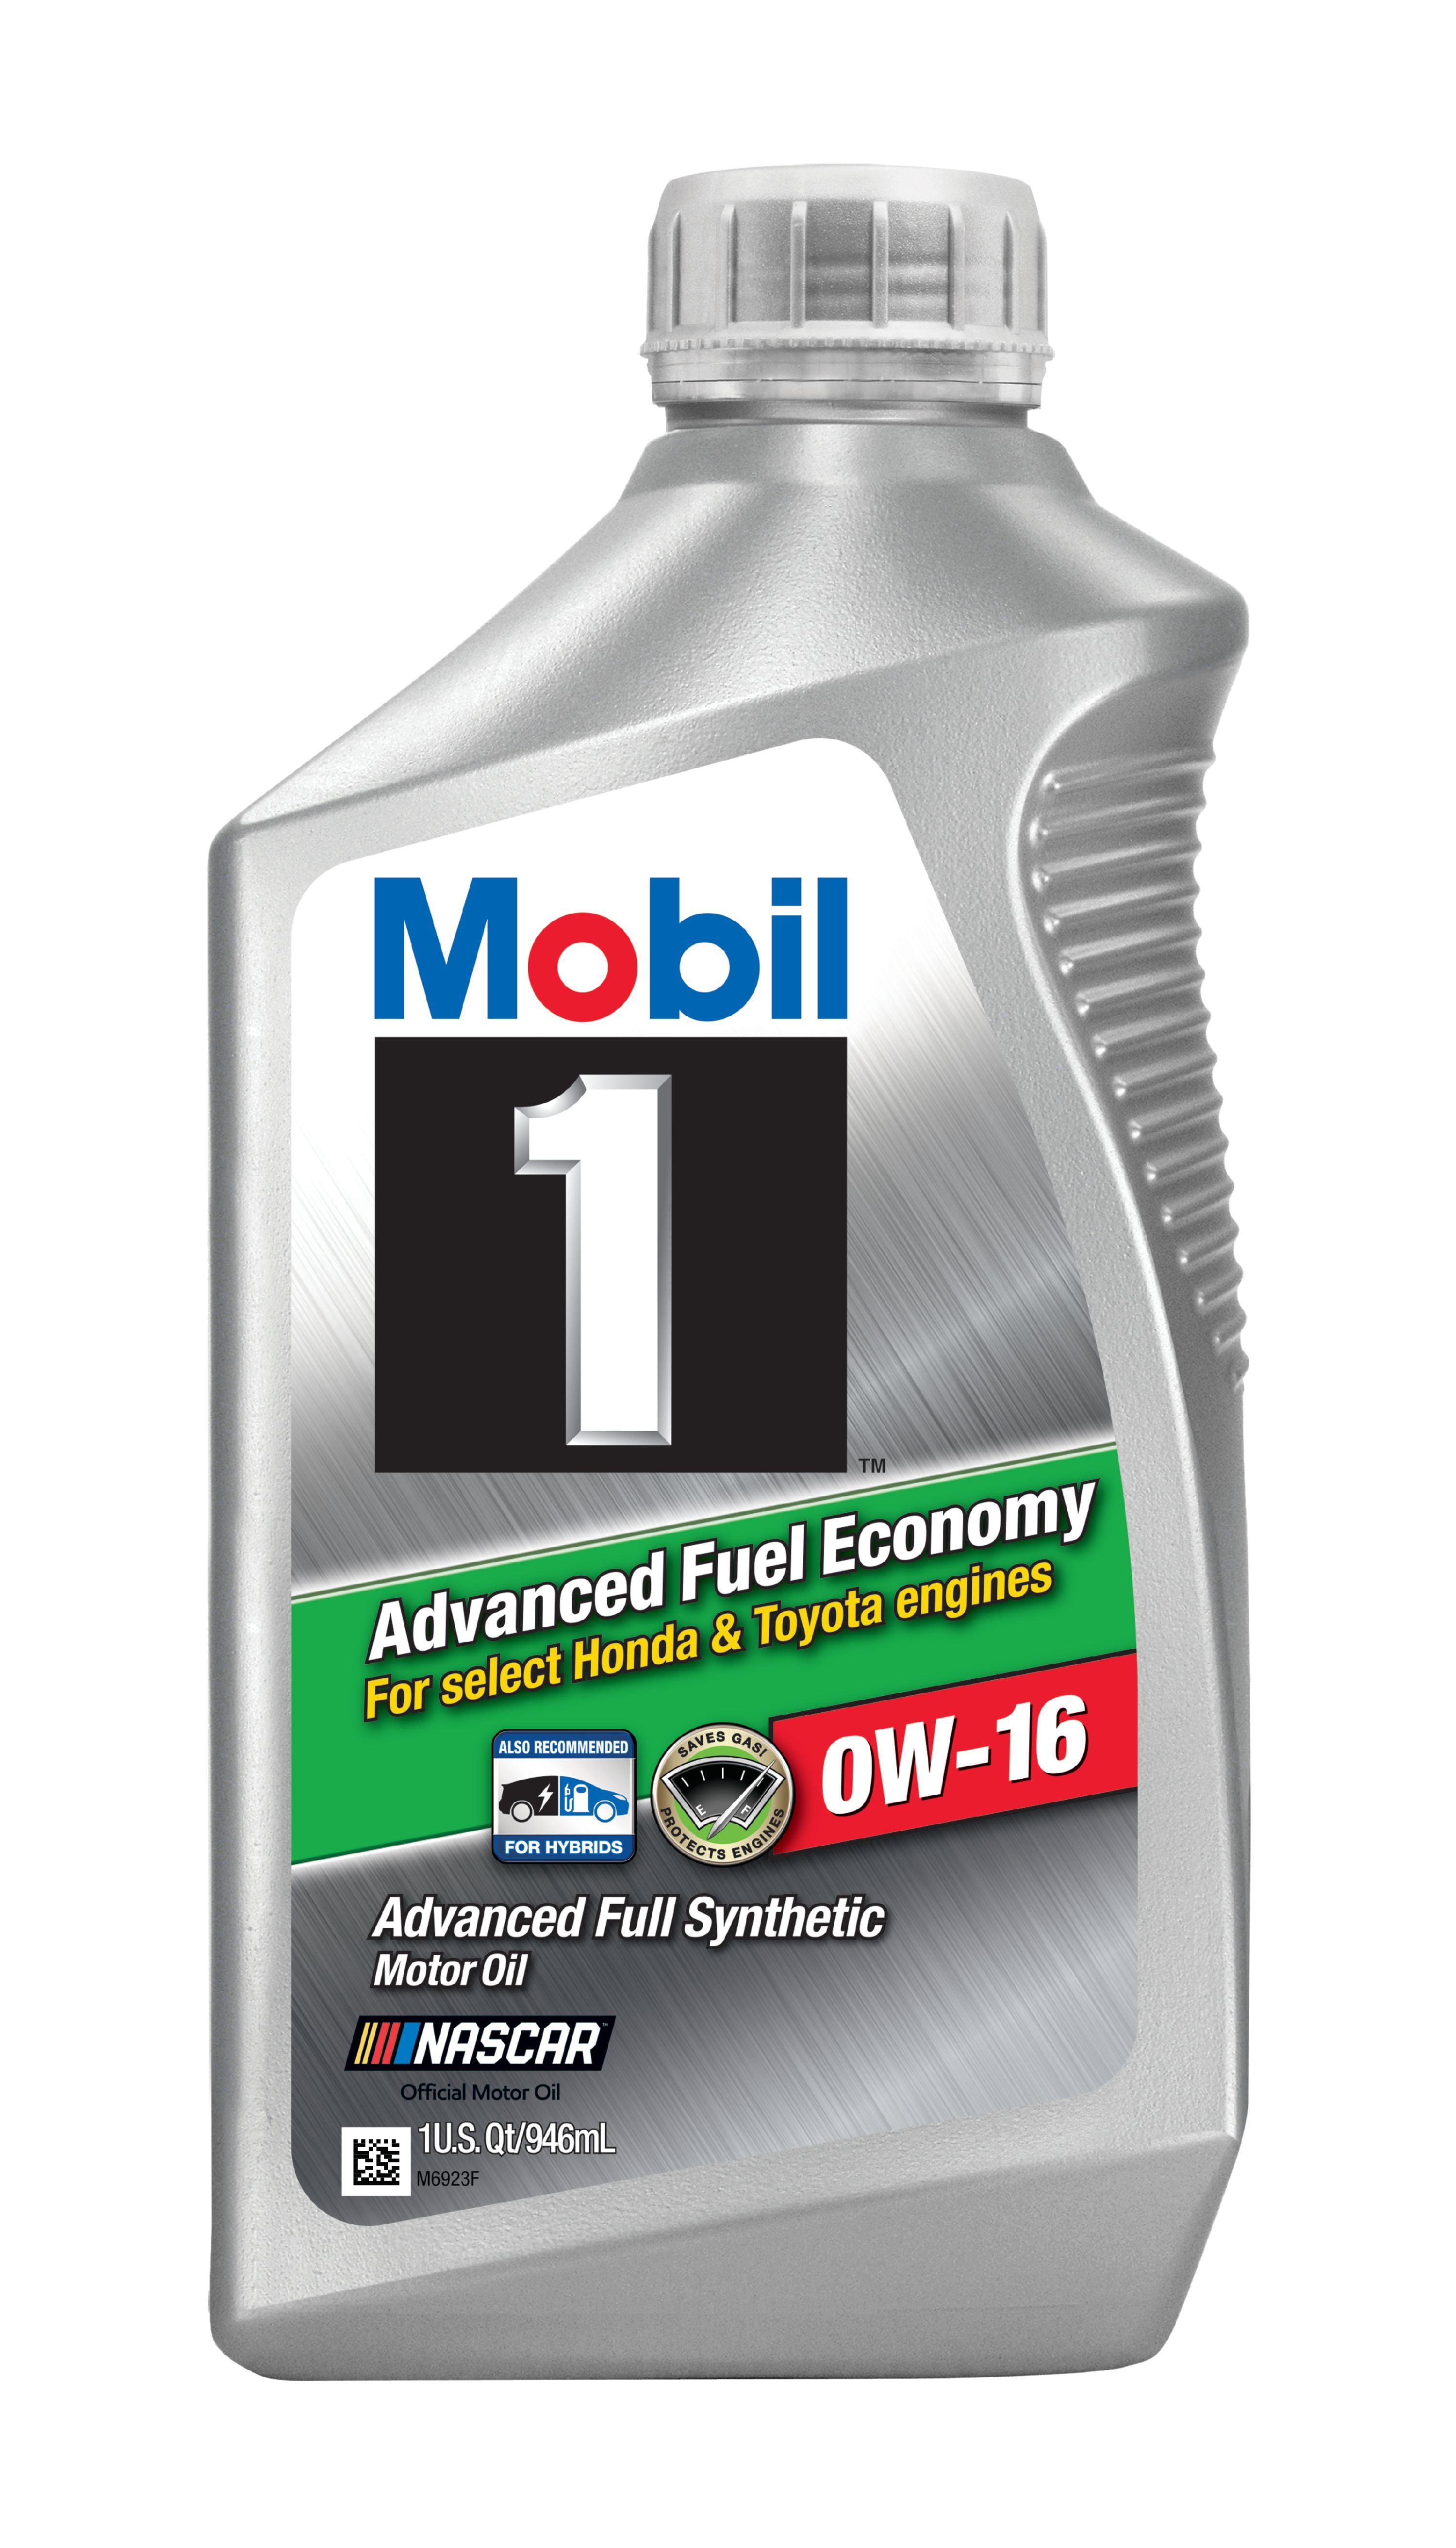 mobil-1-advanced-fuel-economy-full-synthetic-motor-oil-0w-16-1-quart